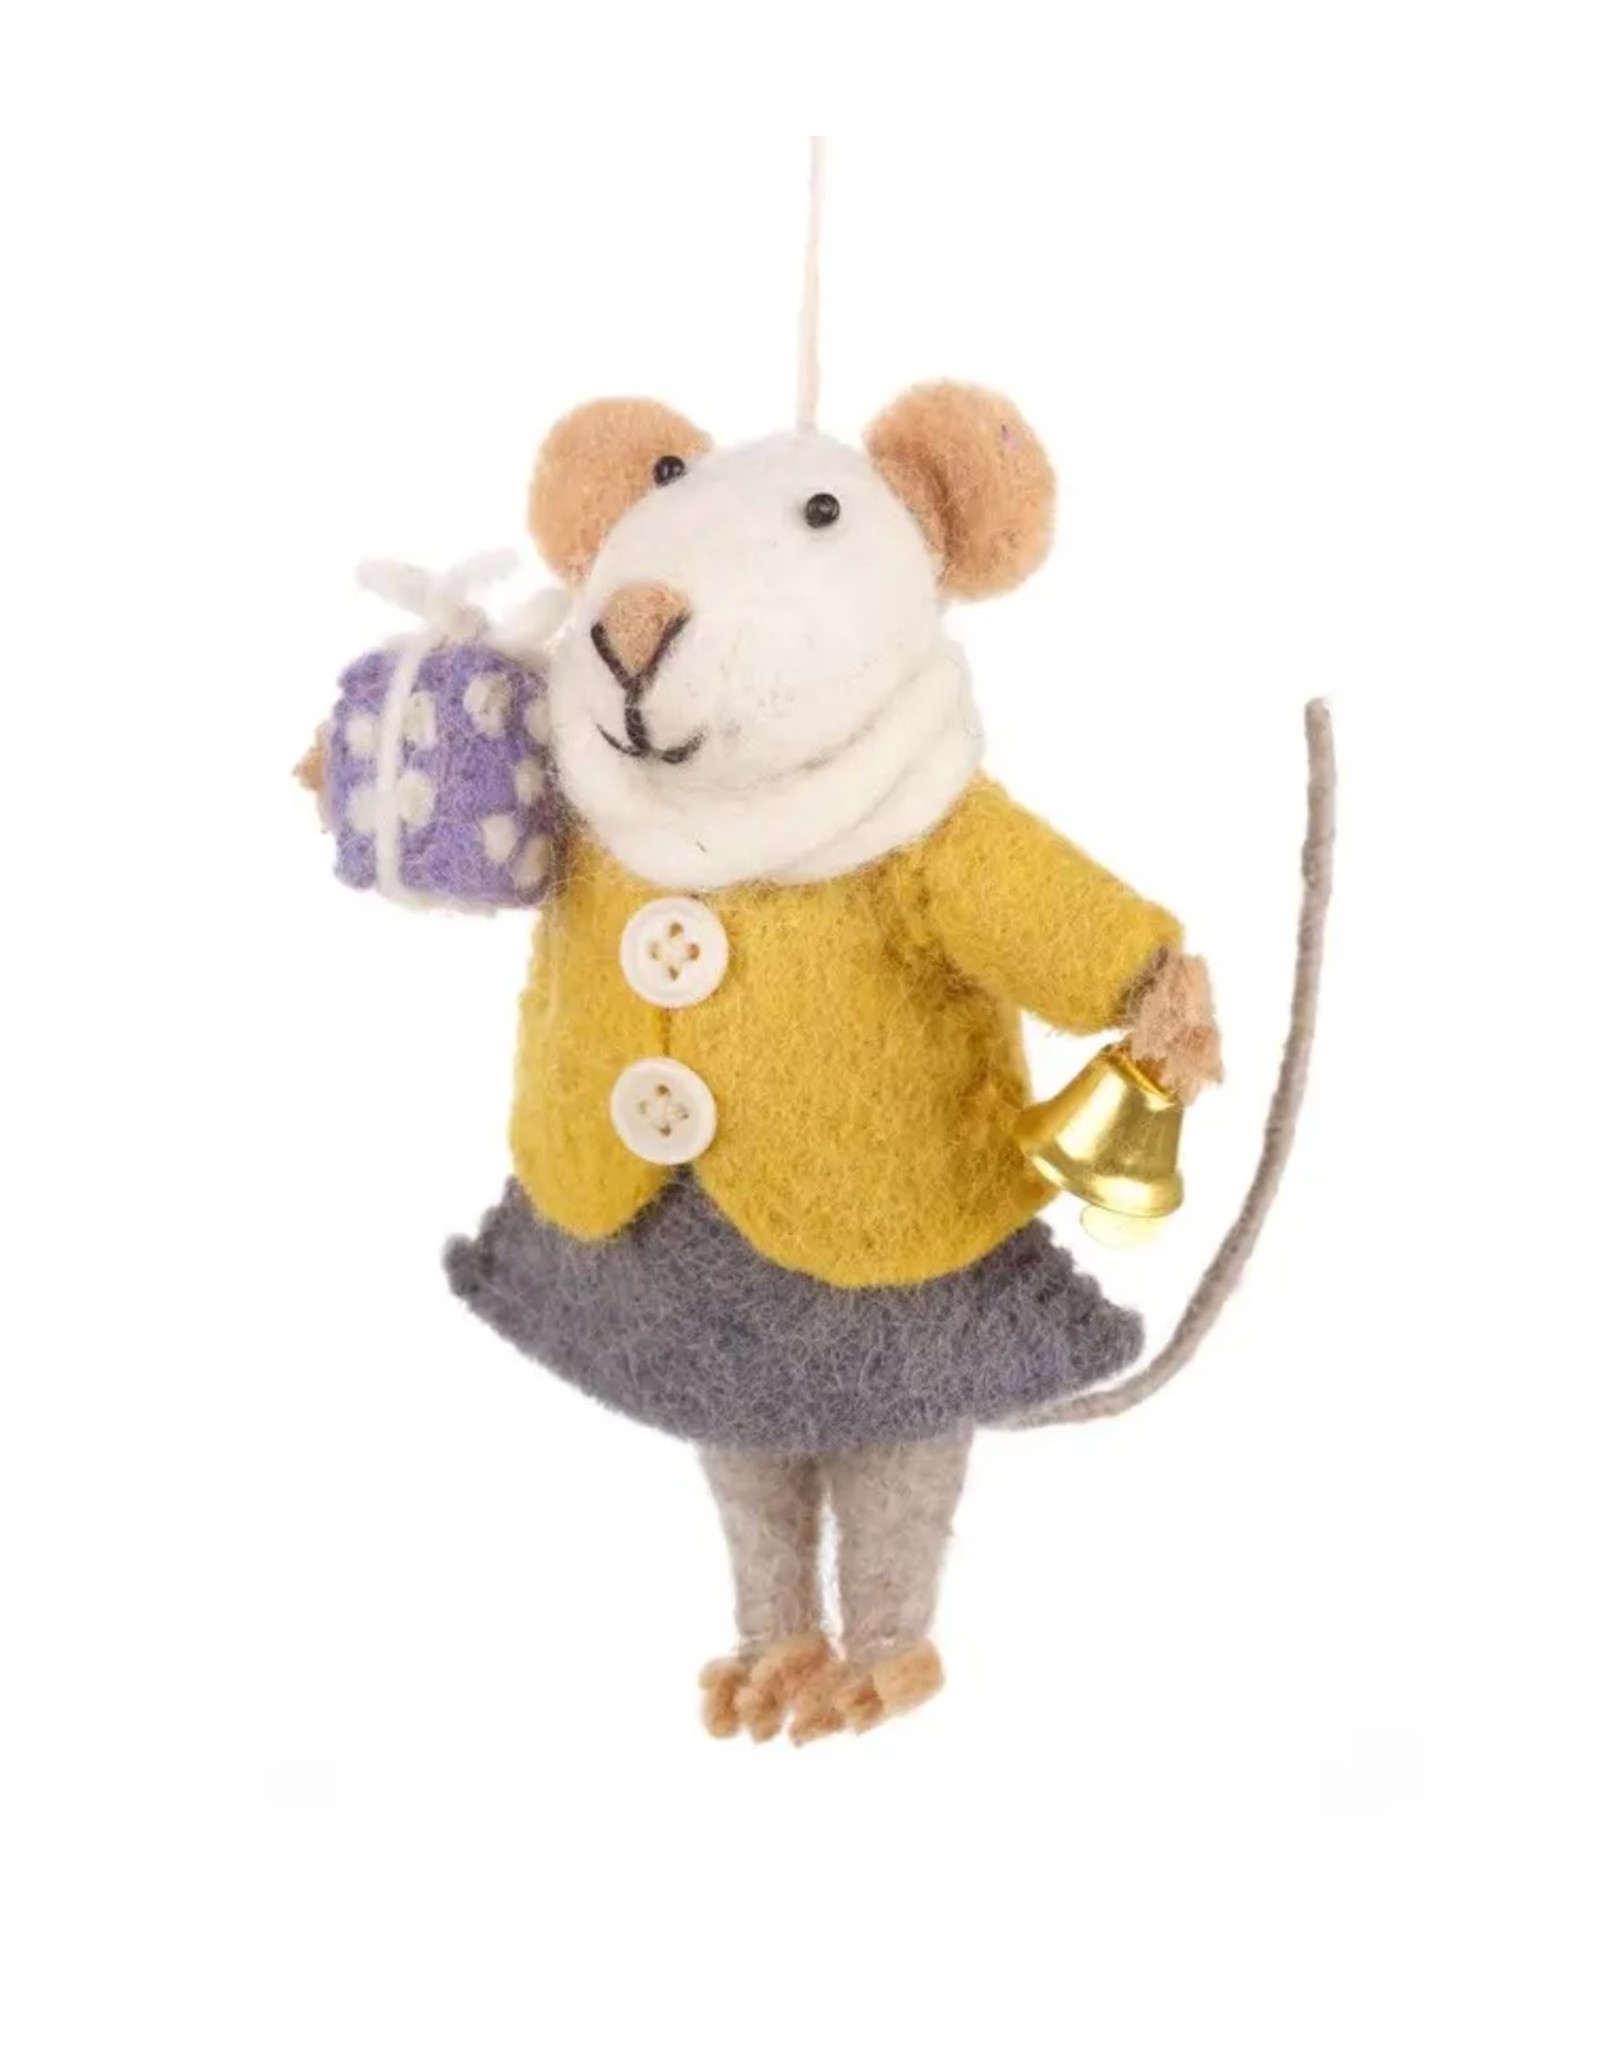 Feltsogood Handmade Felt Agnes Mouse